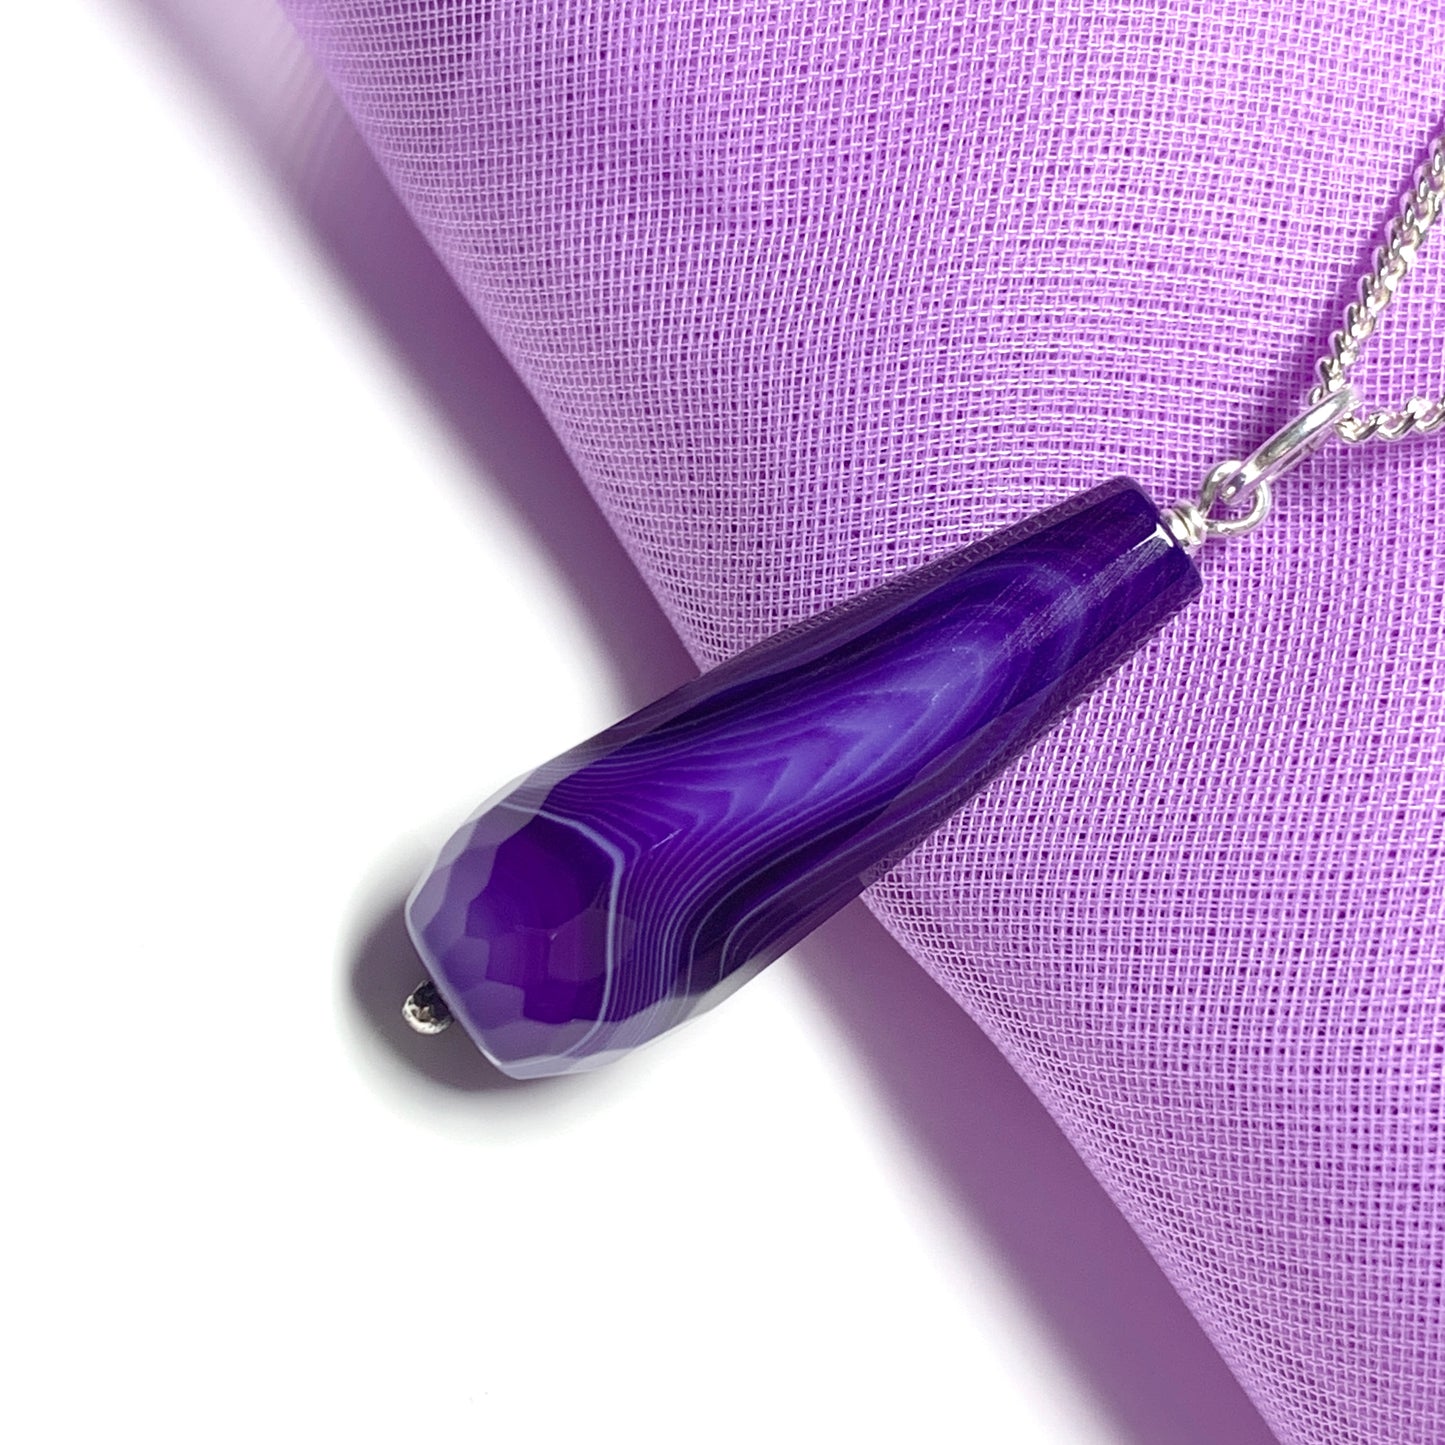 Purple agate teardrop necklace pendent sterling silver